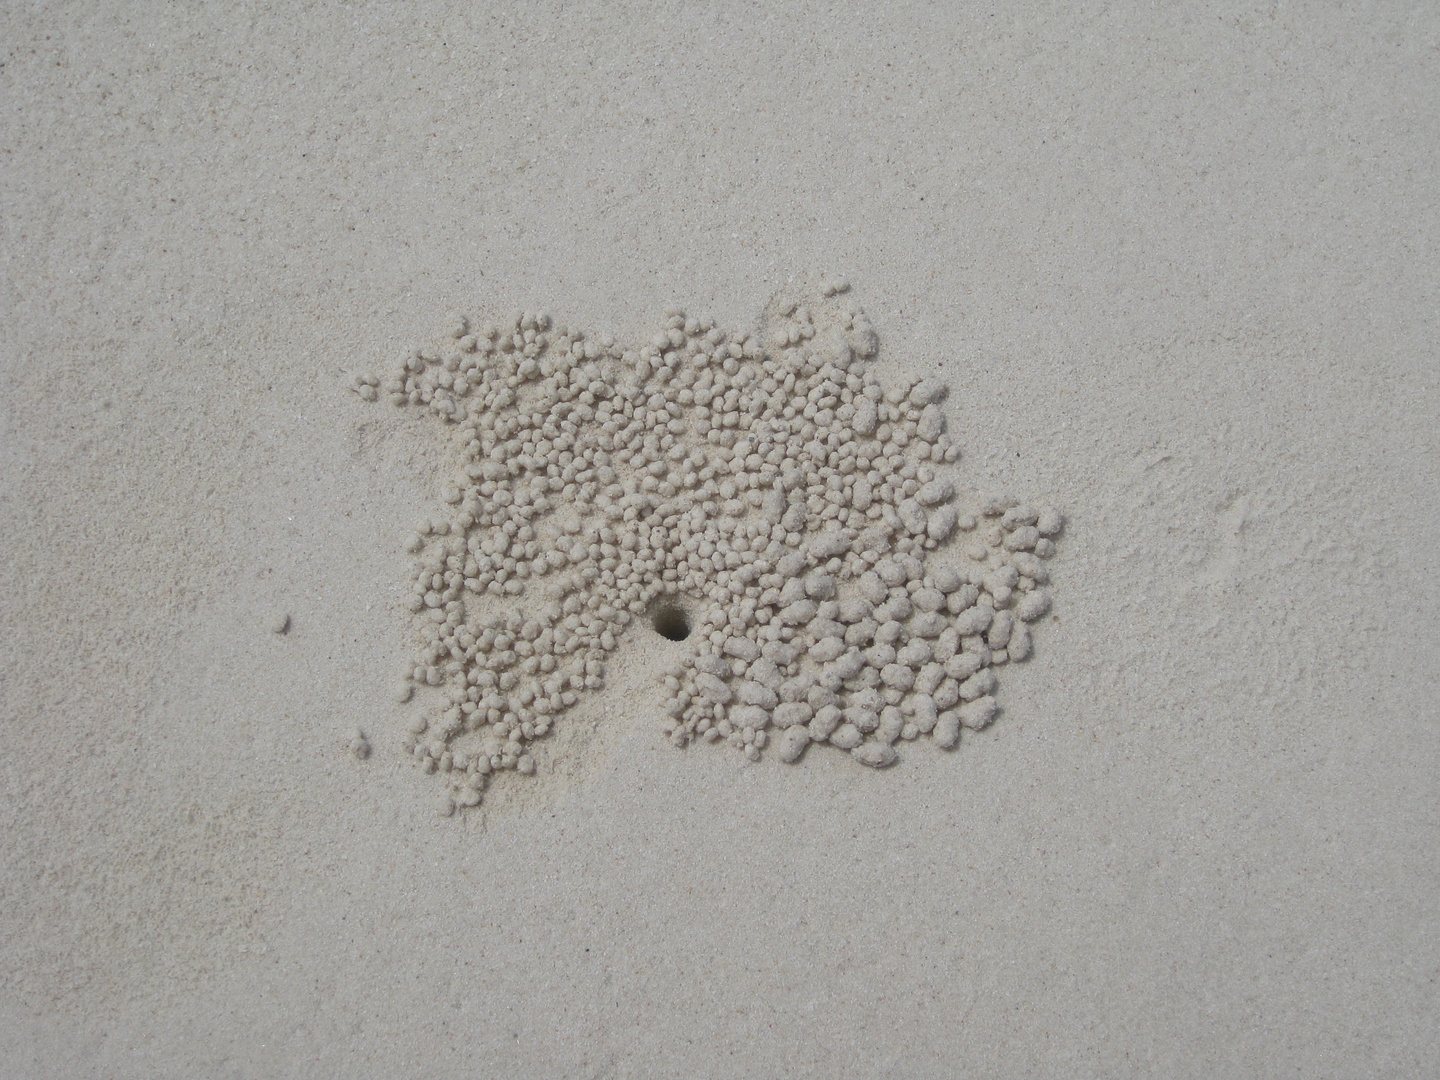 sand "art"